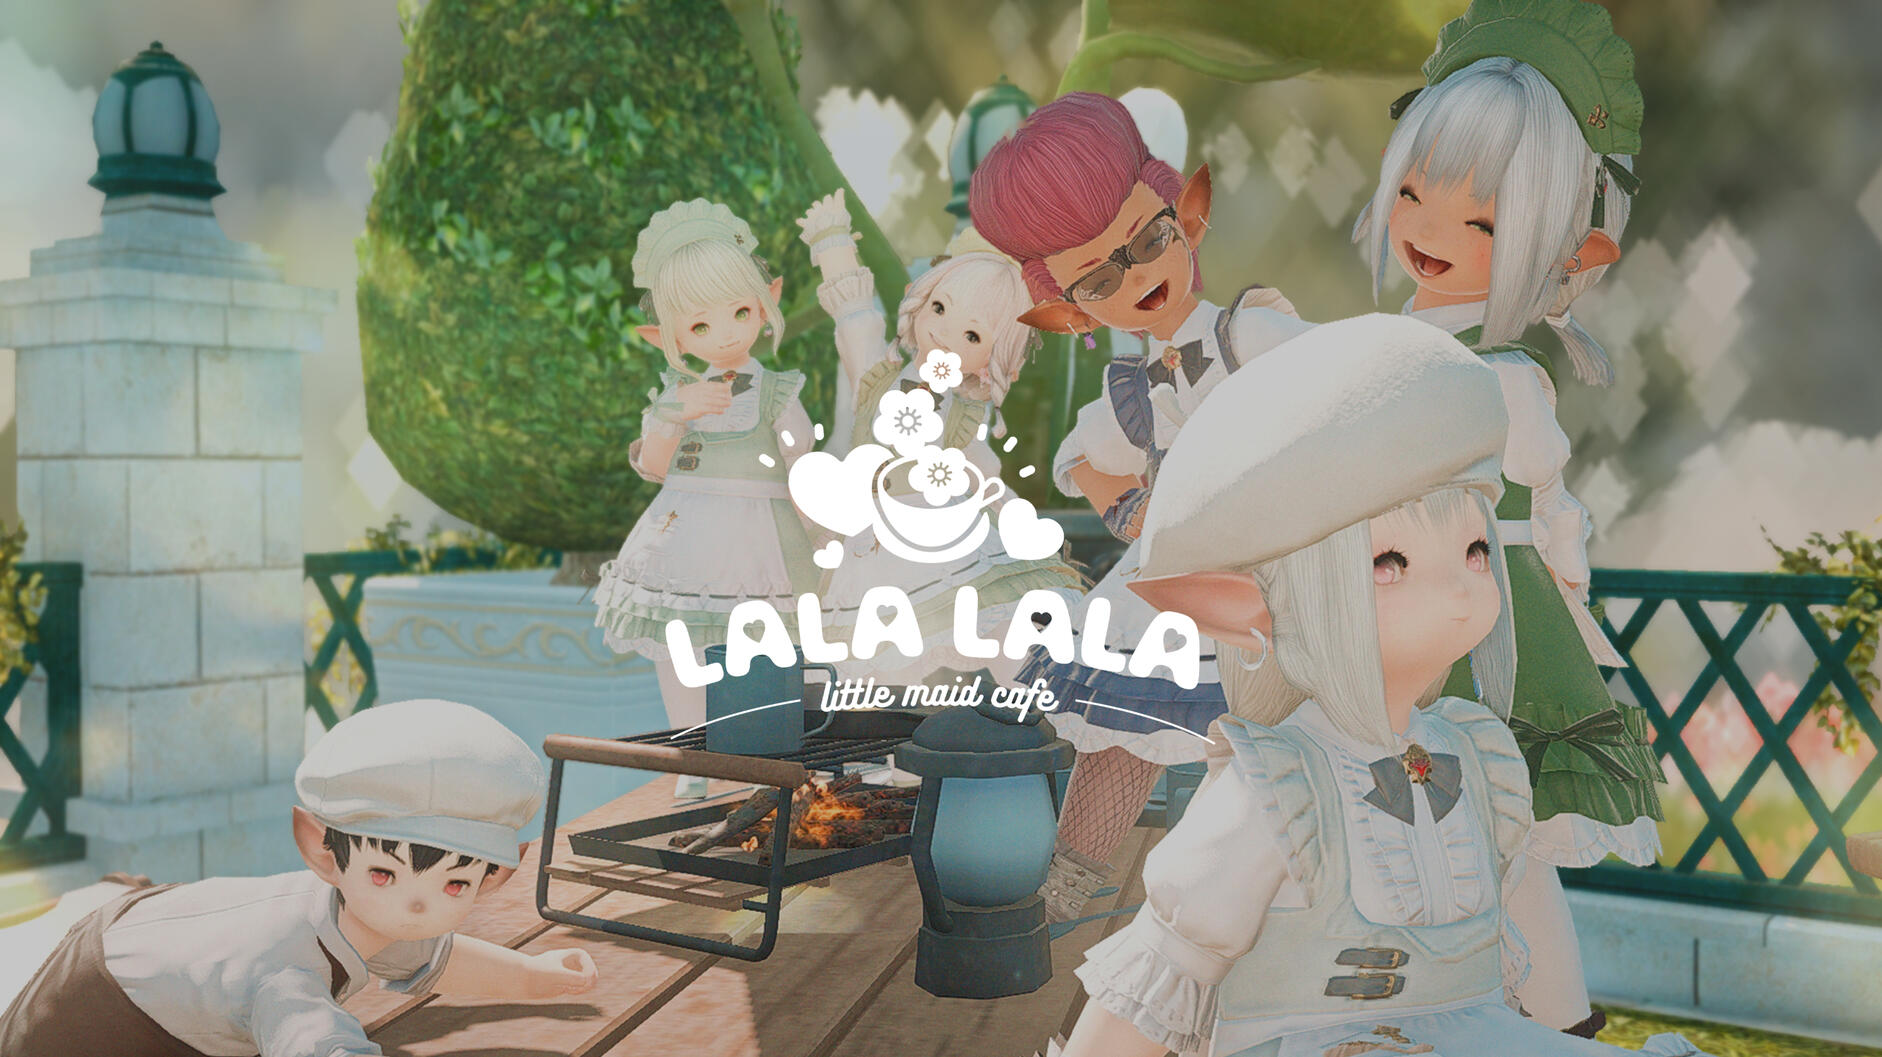 Lala Lala Maid Cafe